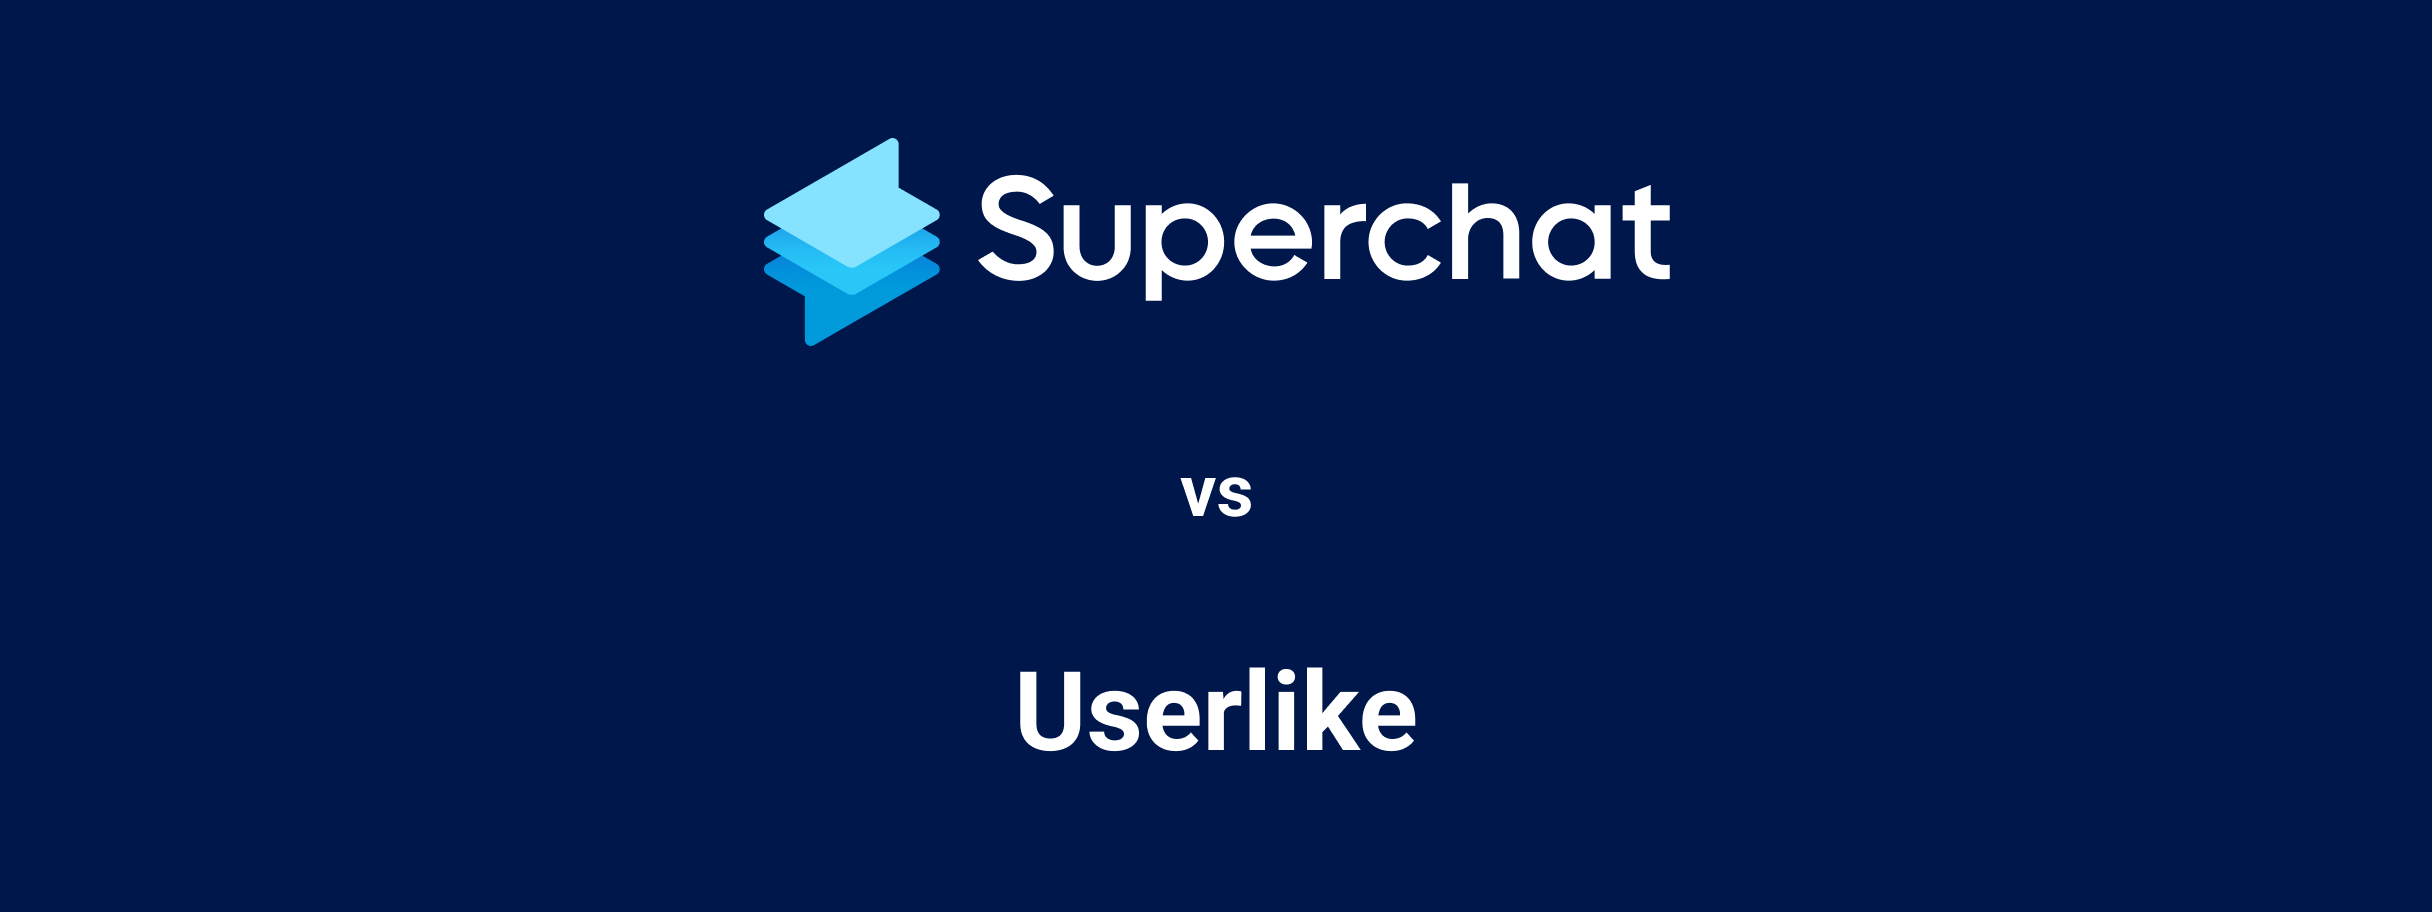 Superchat Vergleich: Userlike Alternative Hero